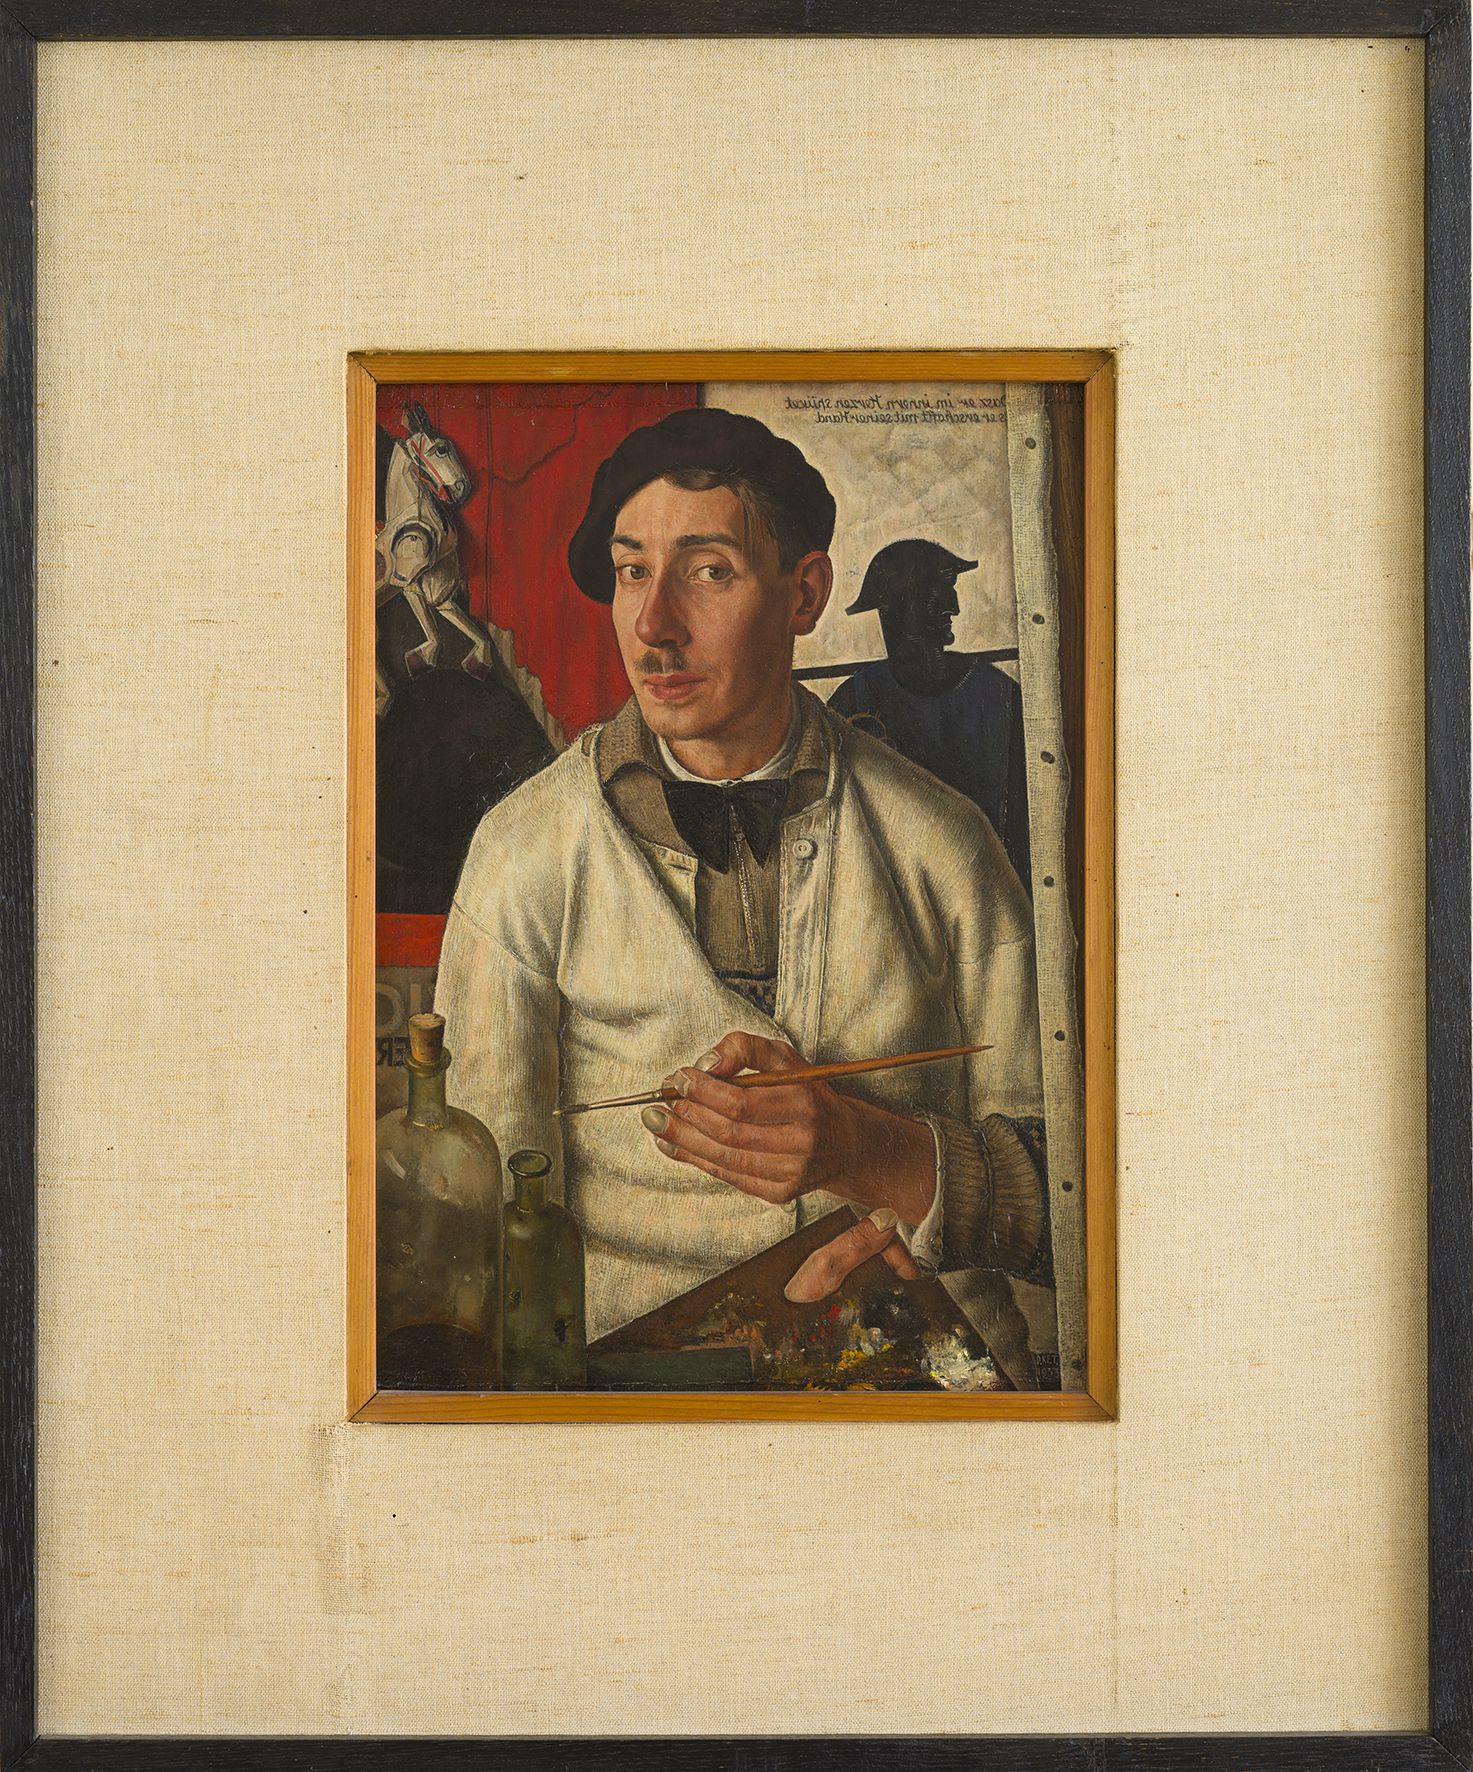 Dick Ket, Zelfportret met baret (Selbstportät mit Barett), 1933, Öl auf Holz, 38,5 x 26,4 cm, Collection Museum Arnhem. (Foto: Peter Cox)